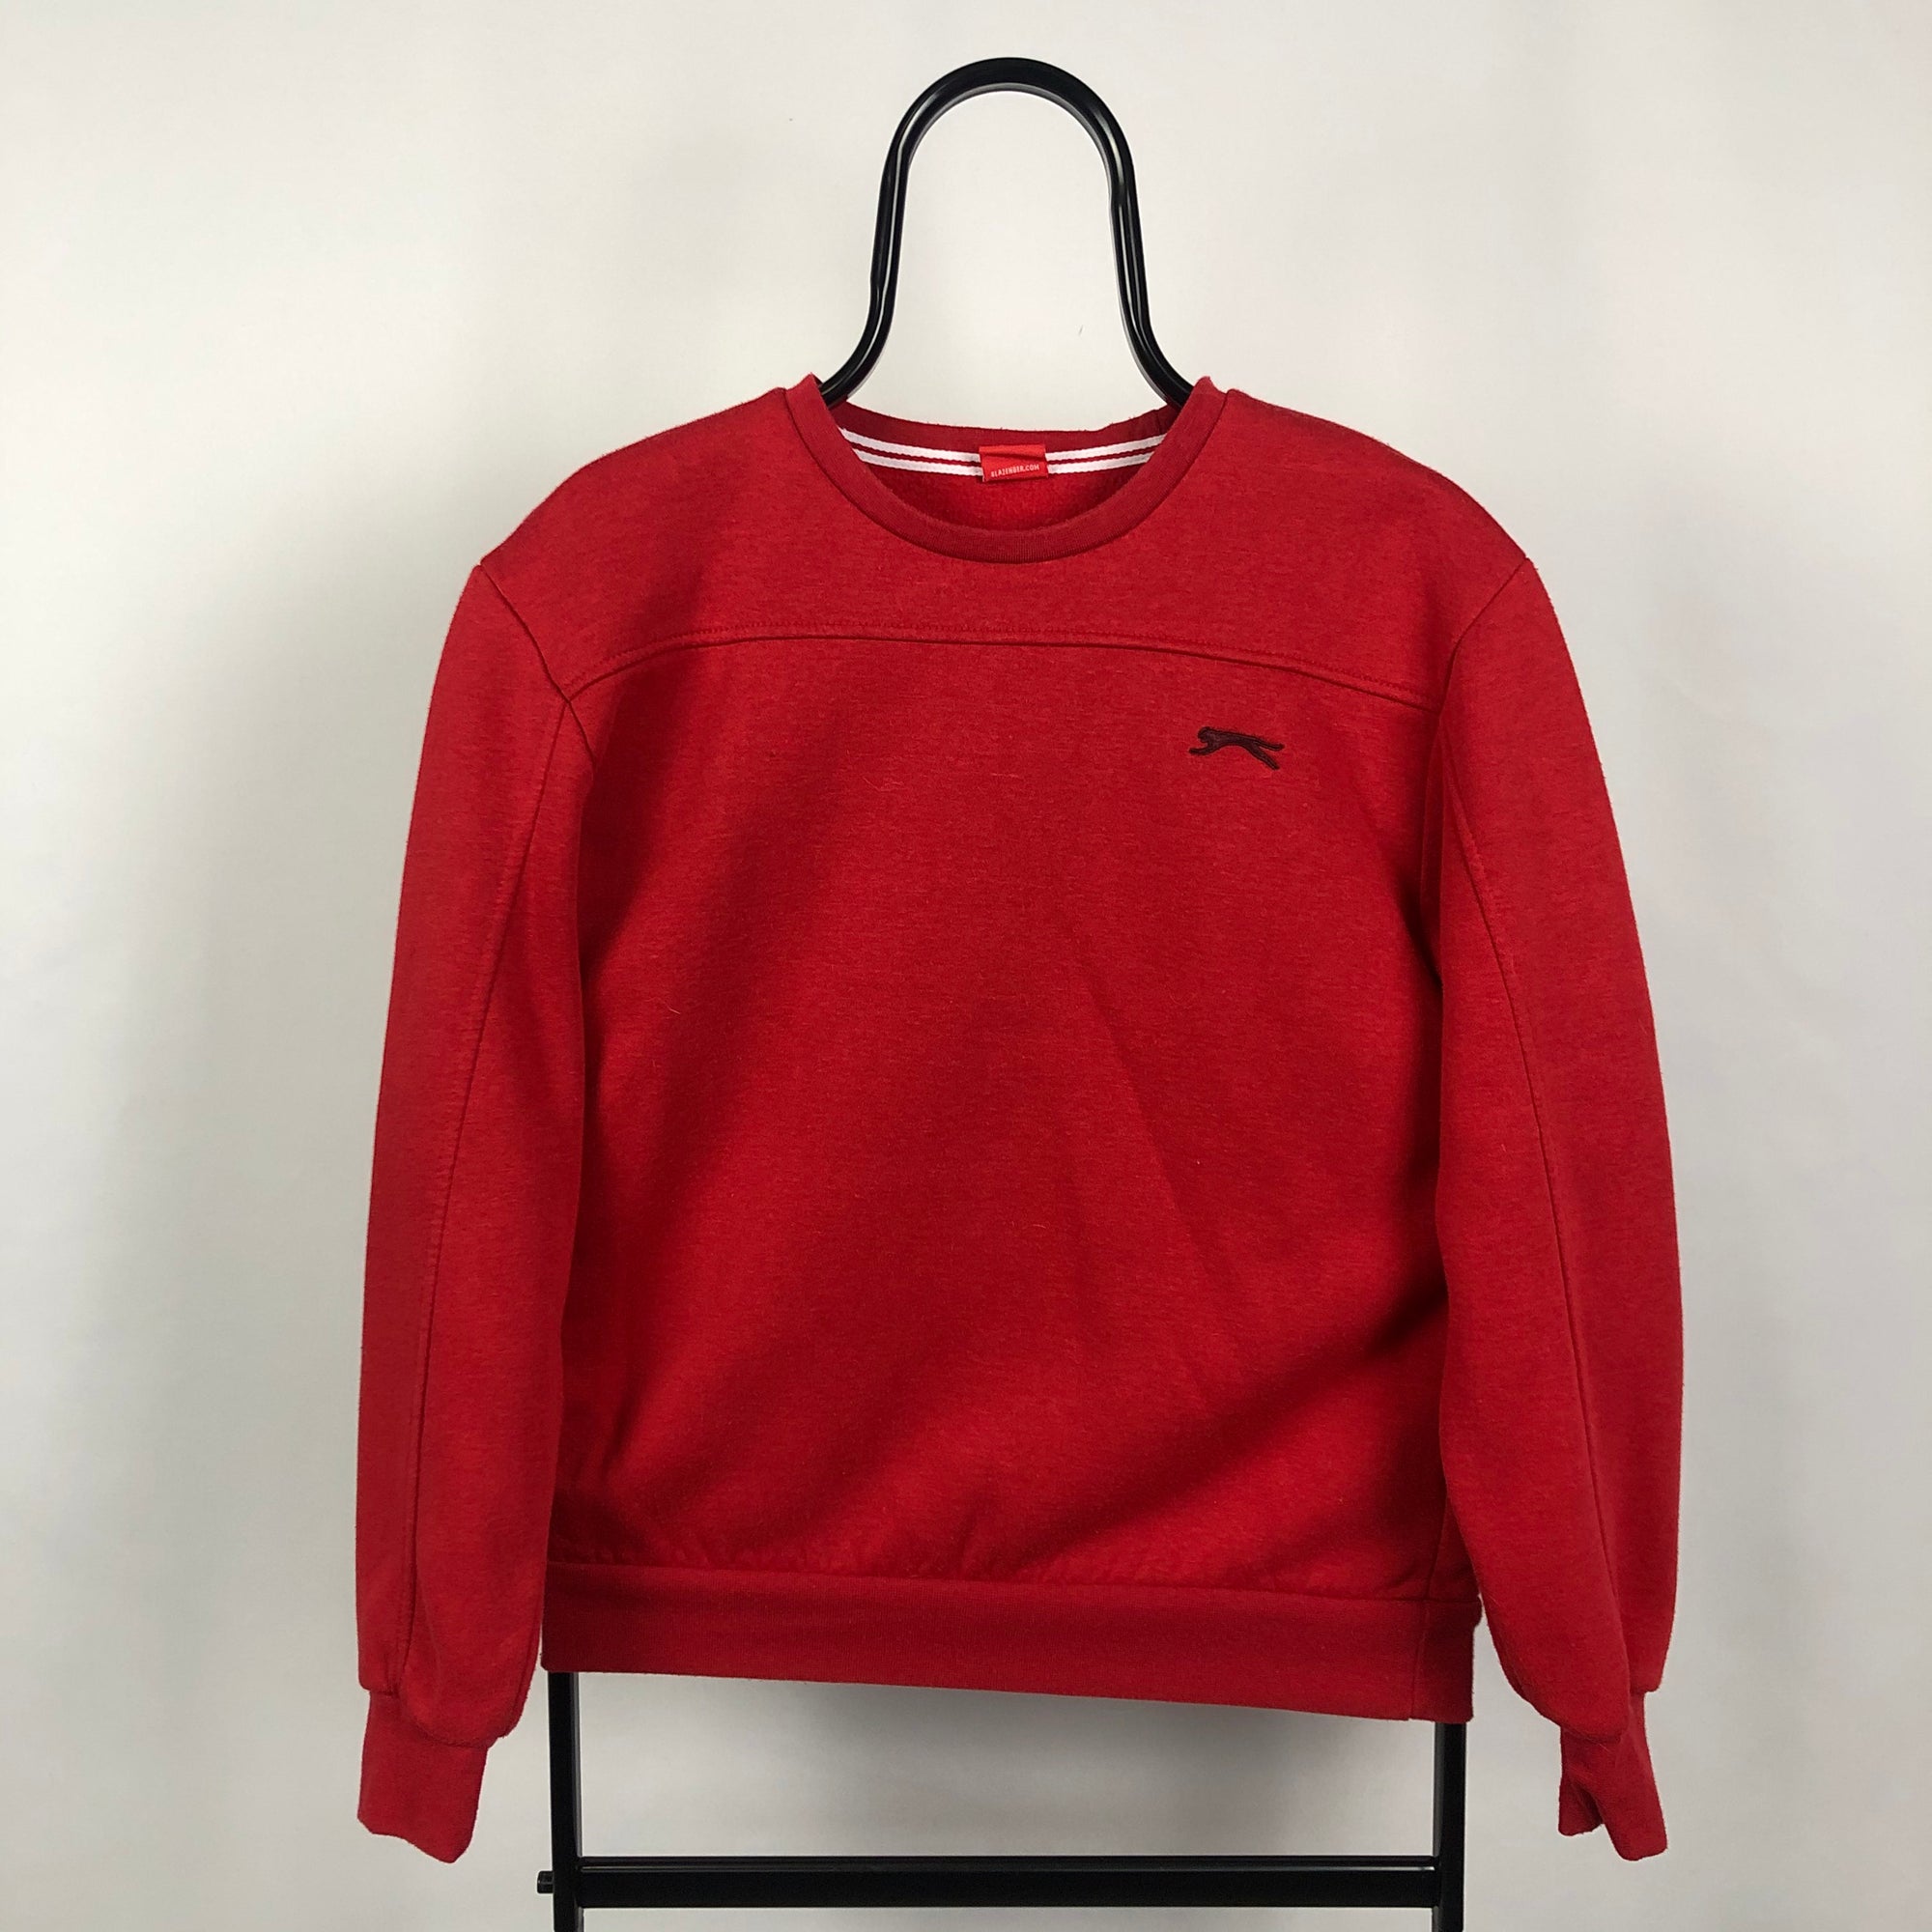 Vintage Slazenger Sweatshirt in Red - Women's Small